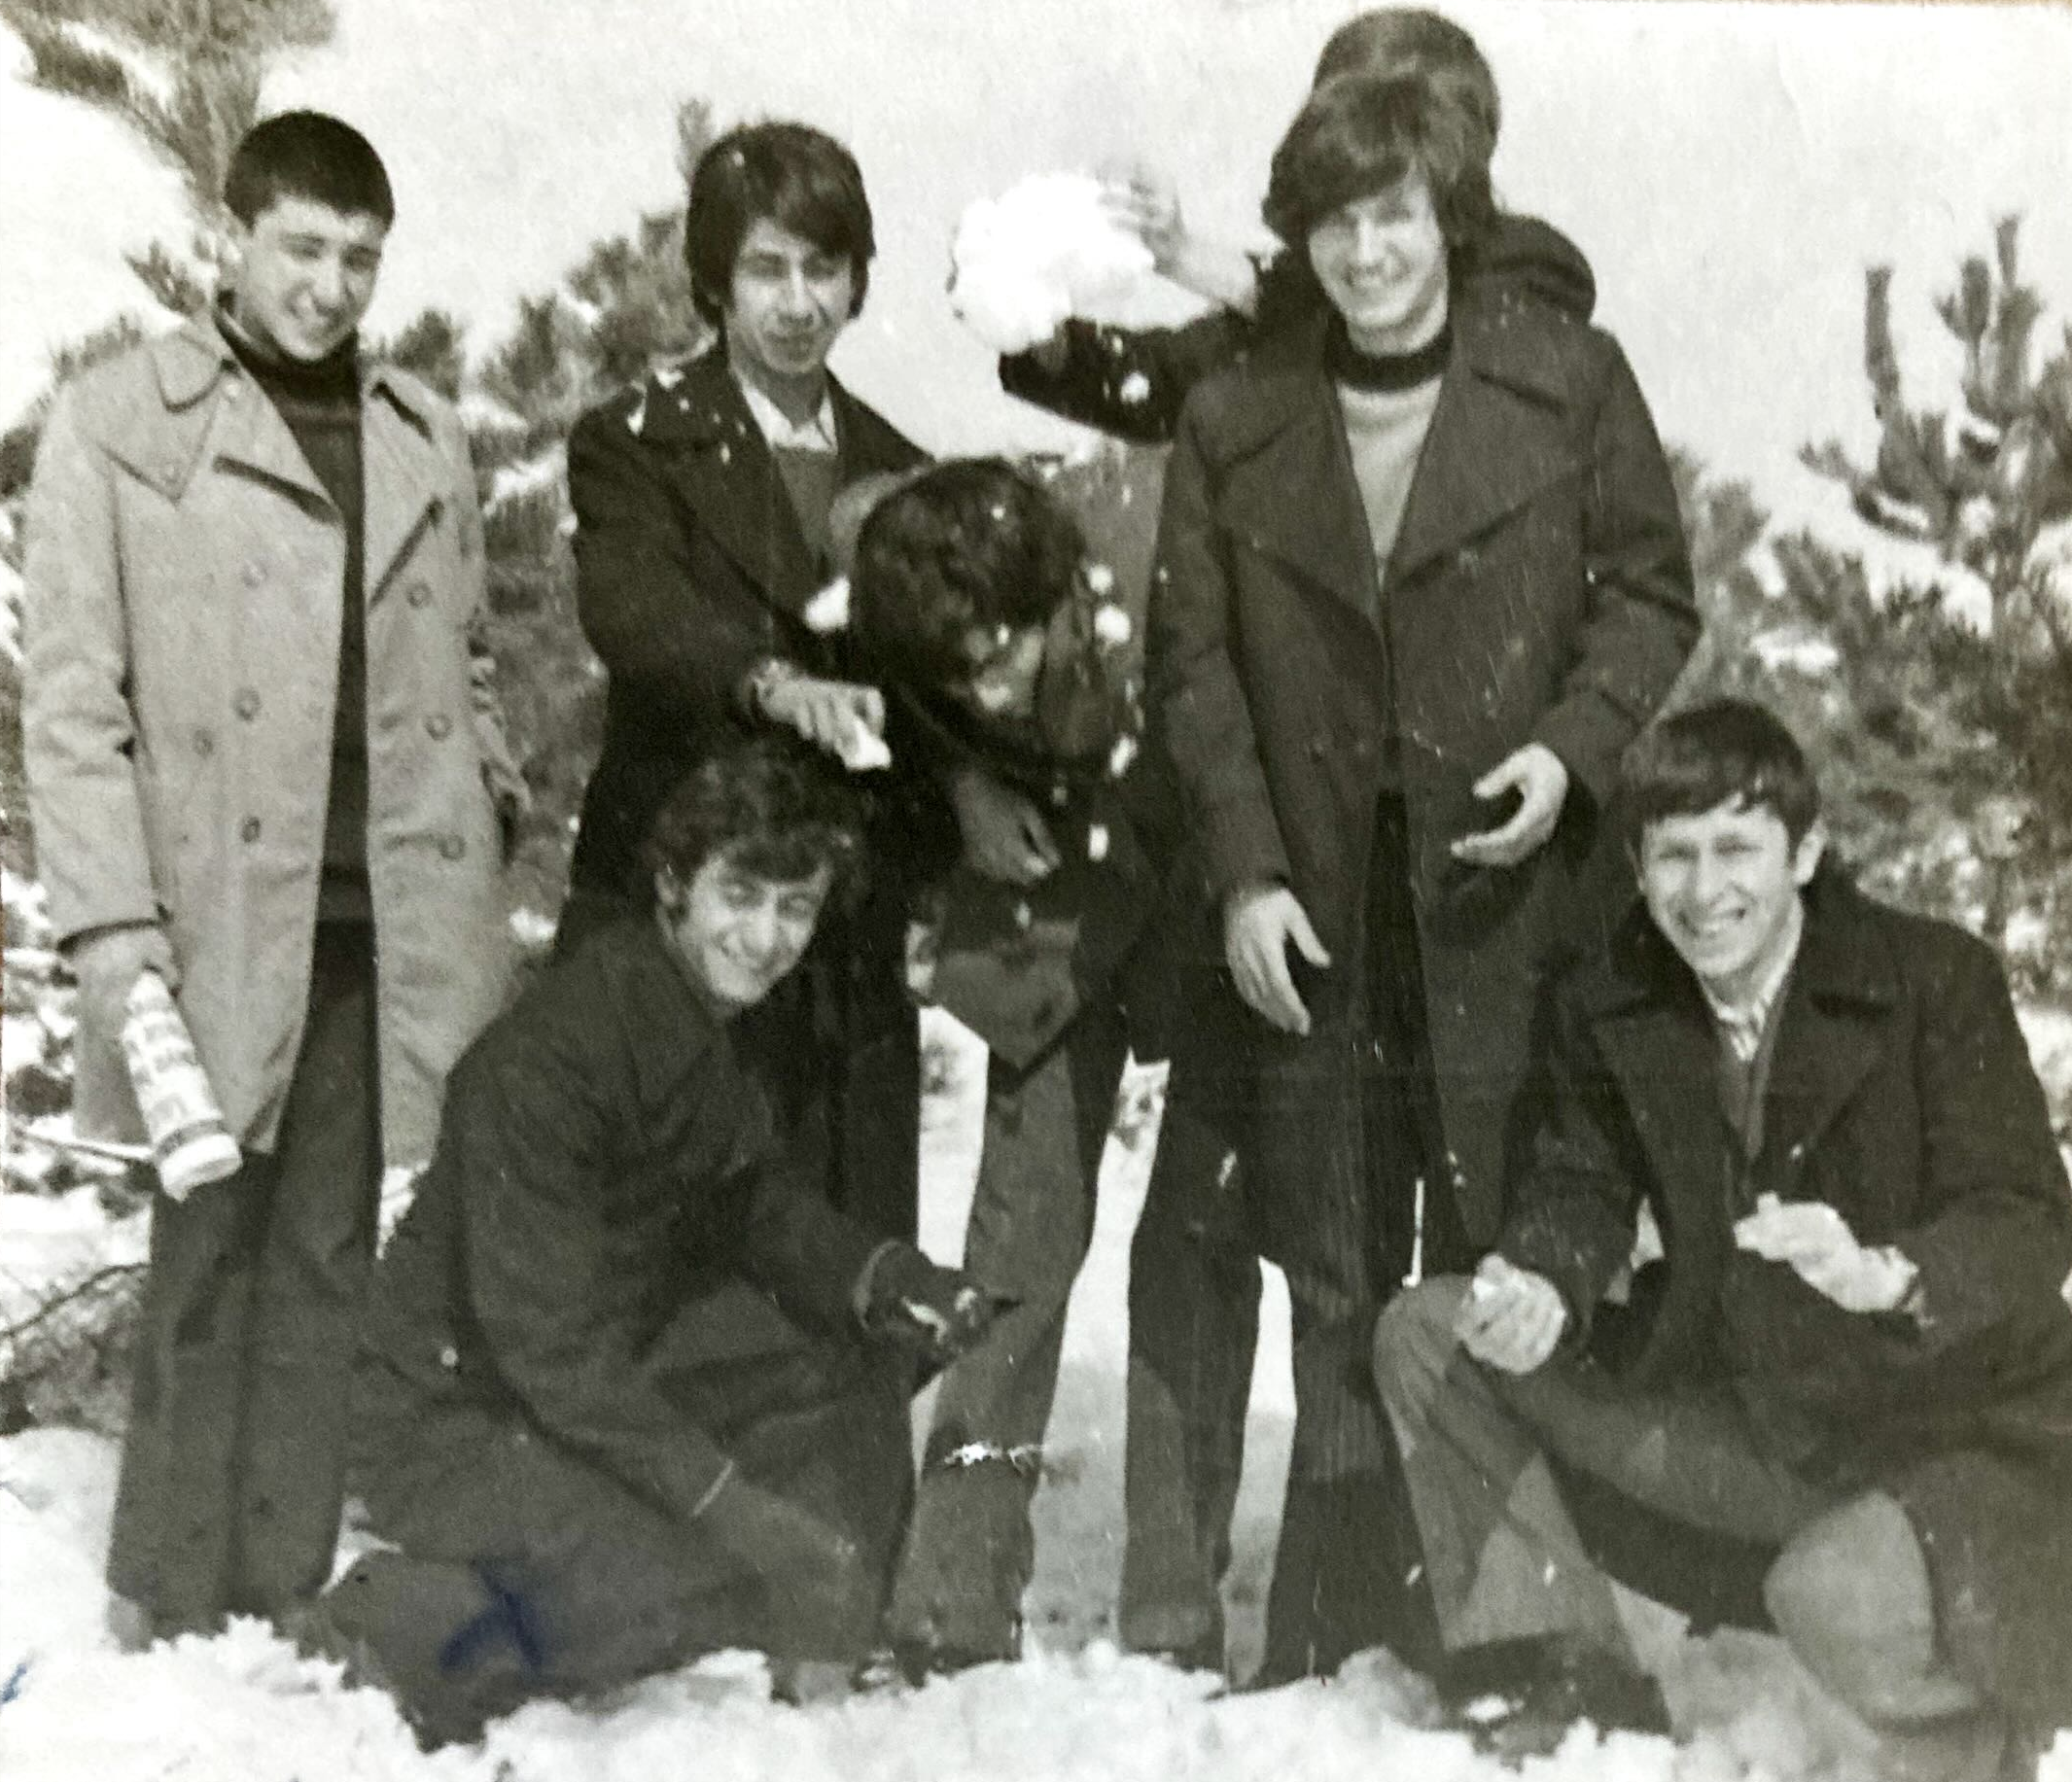 Preparatory school students in winter 1973